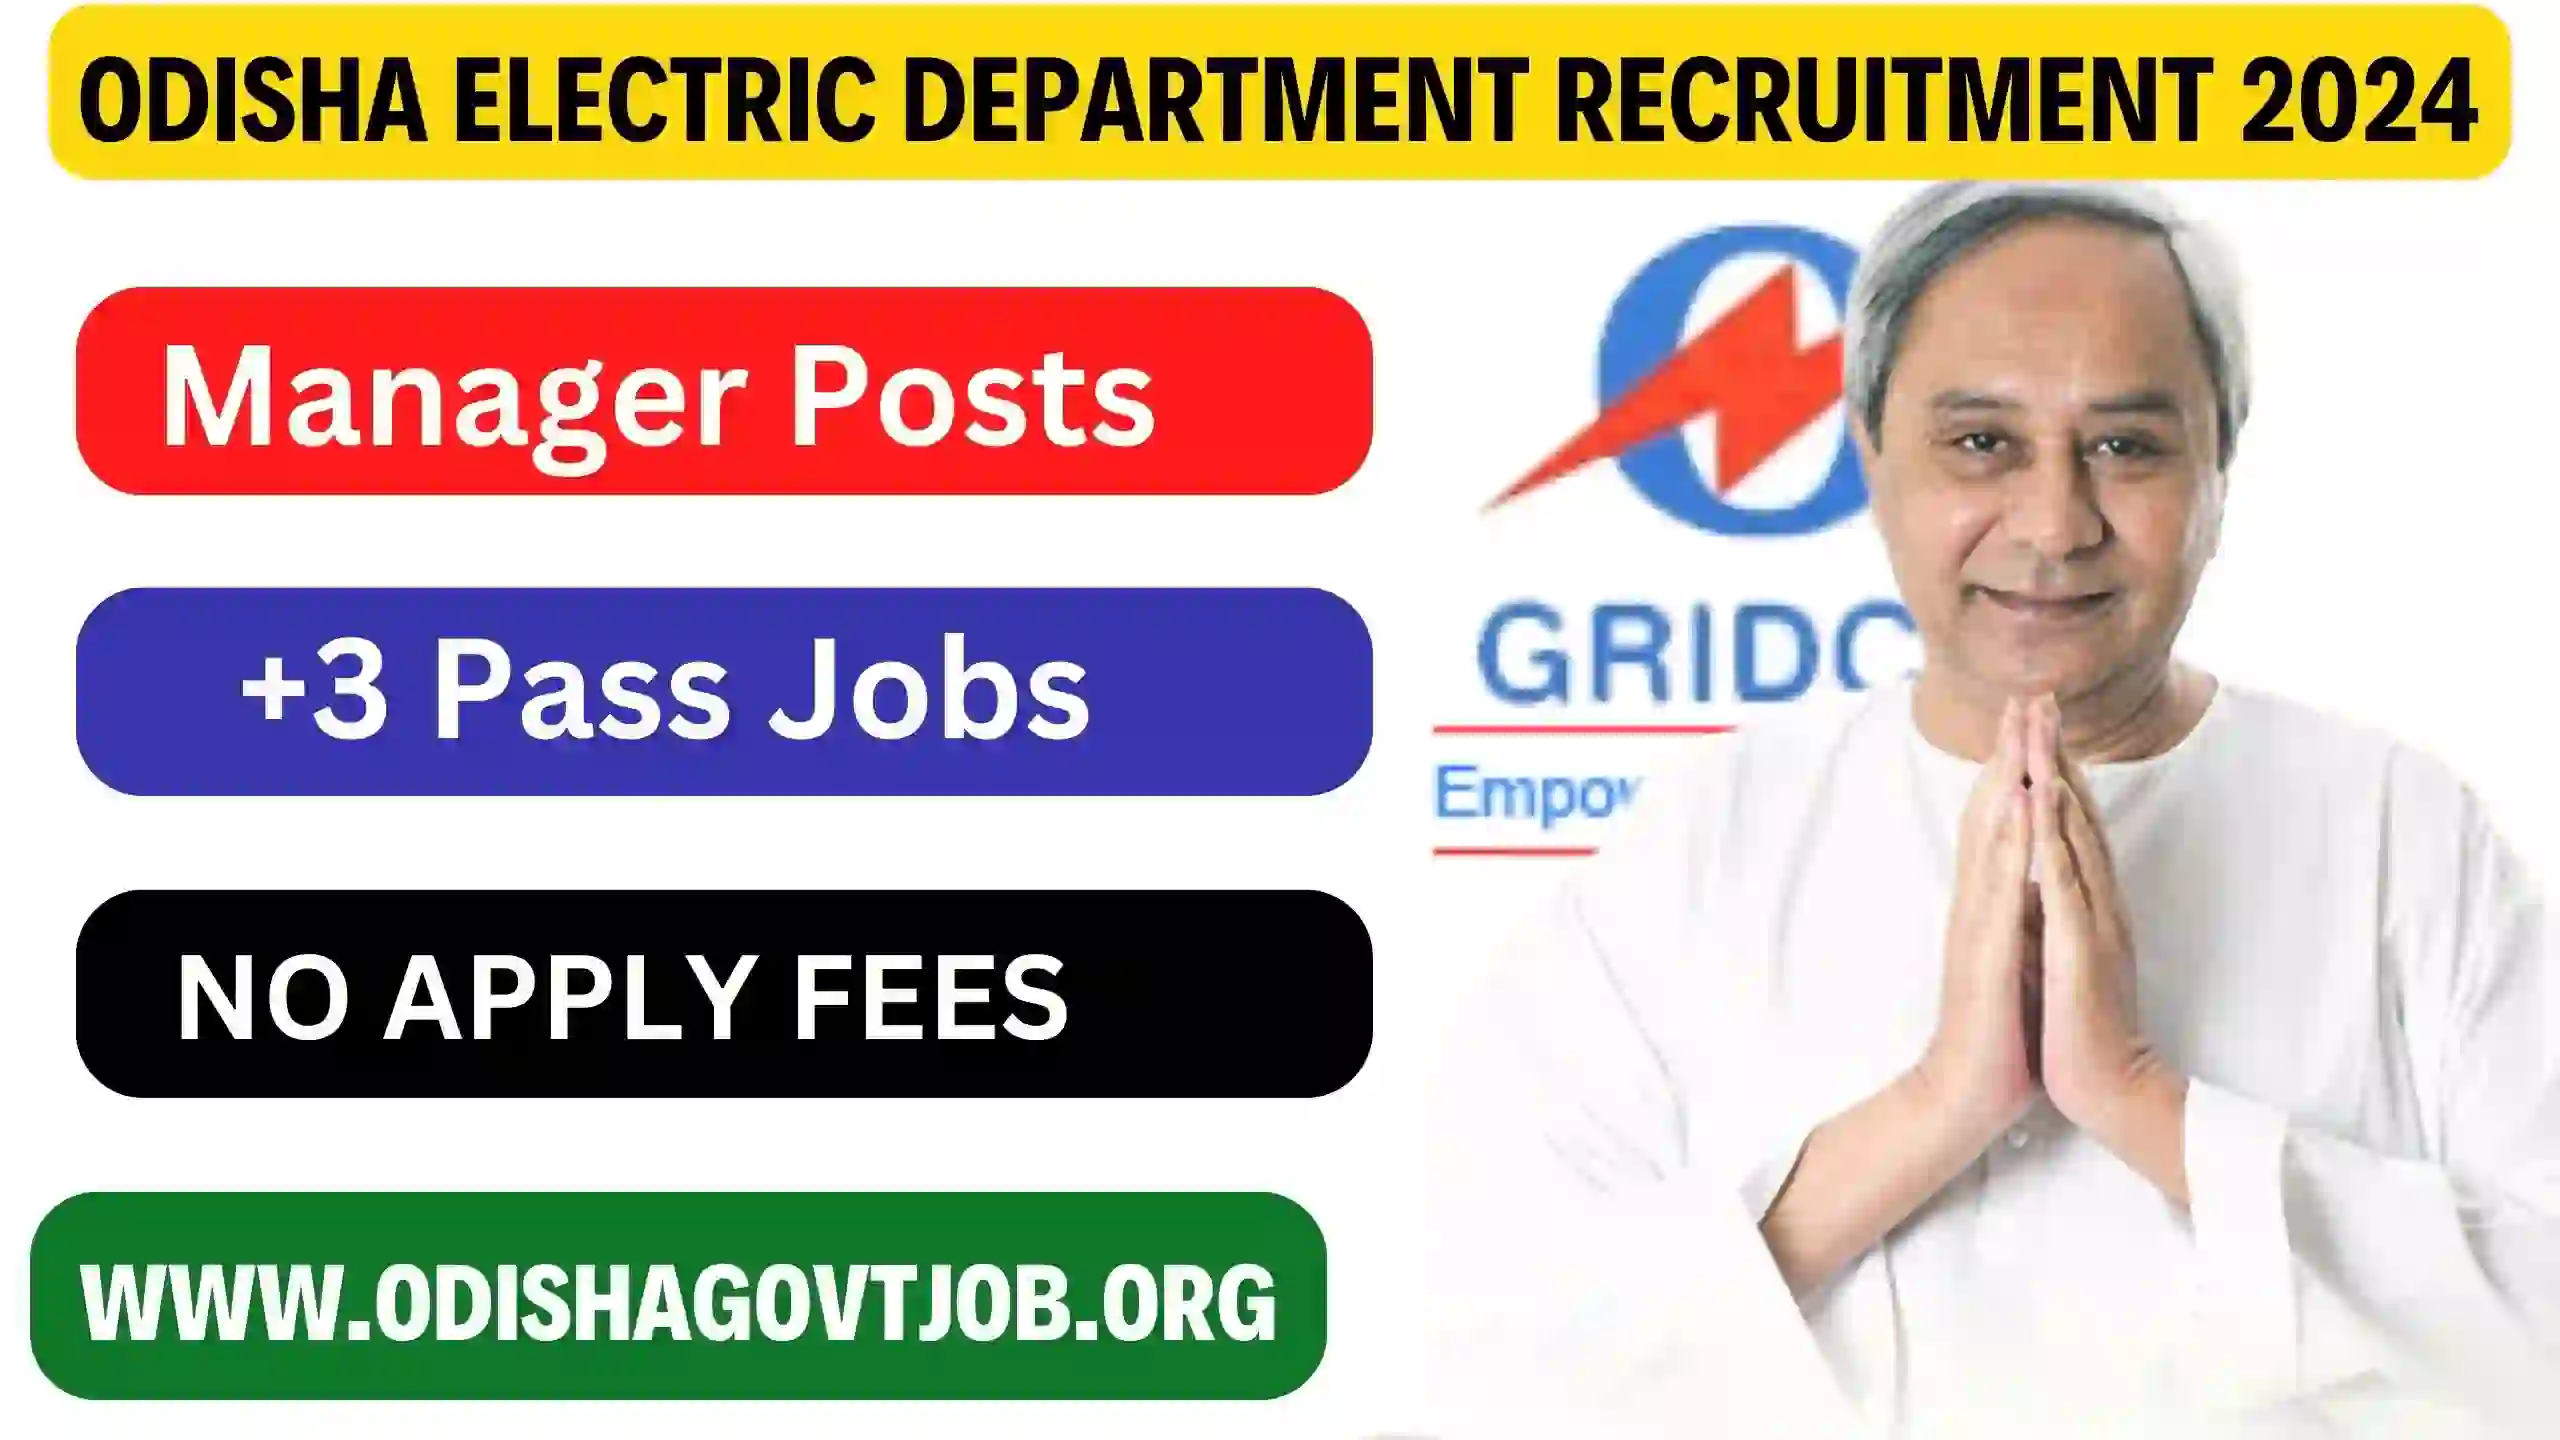 Odisha Electric Department Recruitment 2024